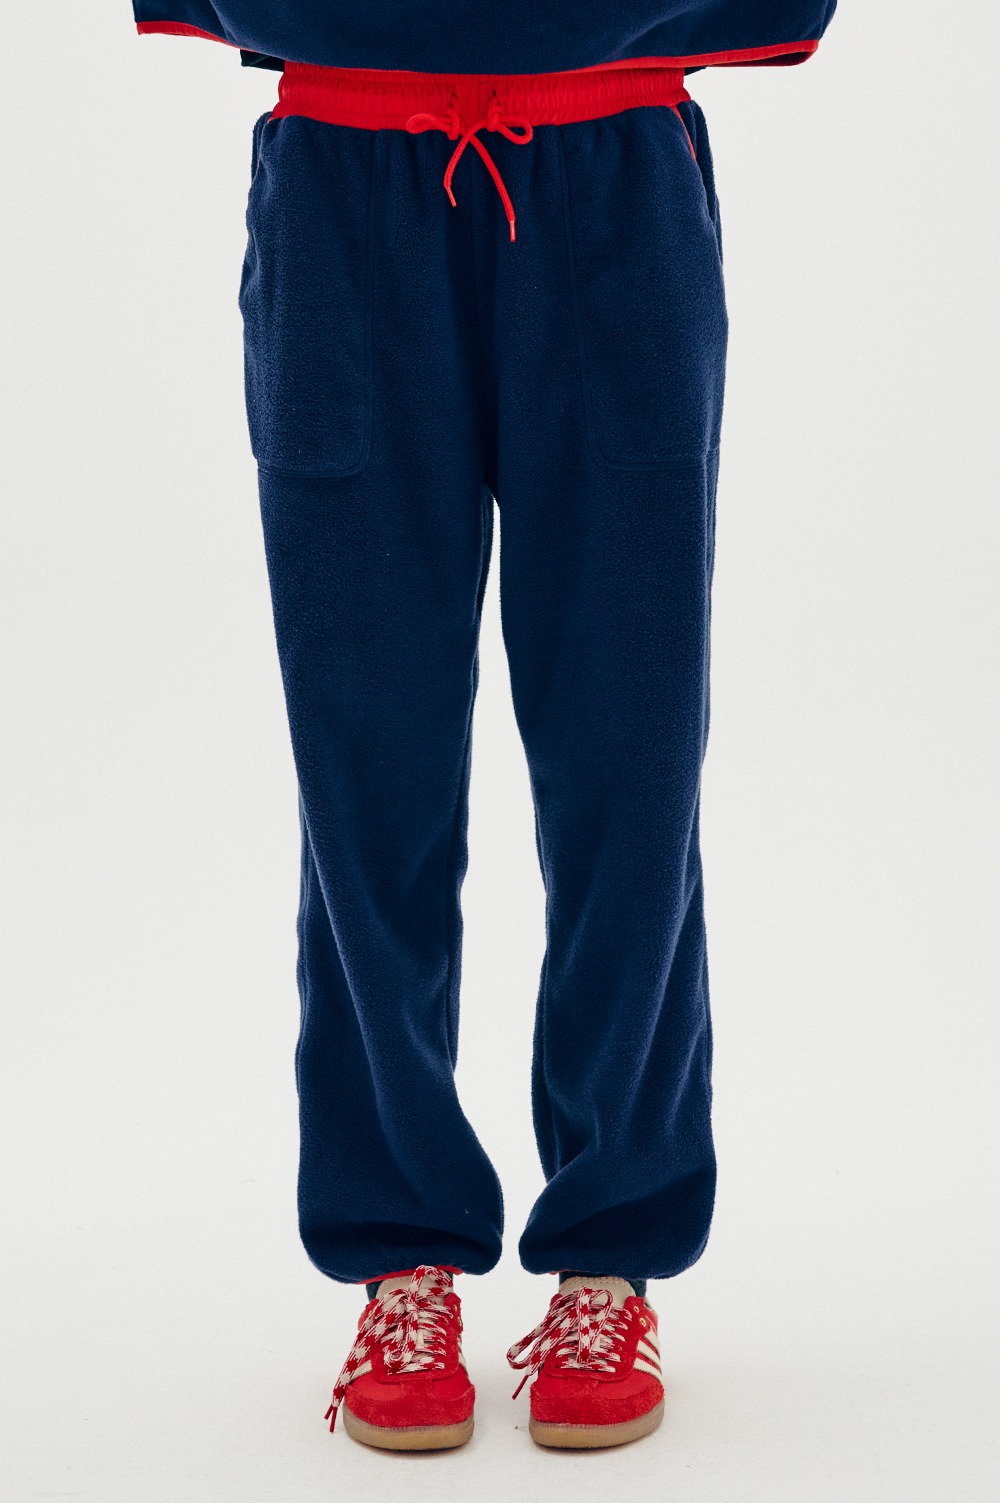 clove - [22FW clove] Colored Fleece Pants_Women (Navy)